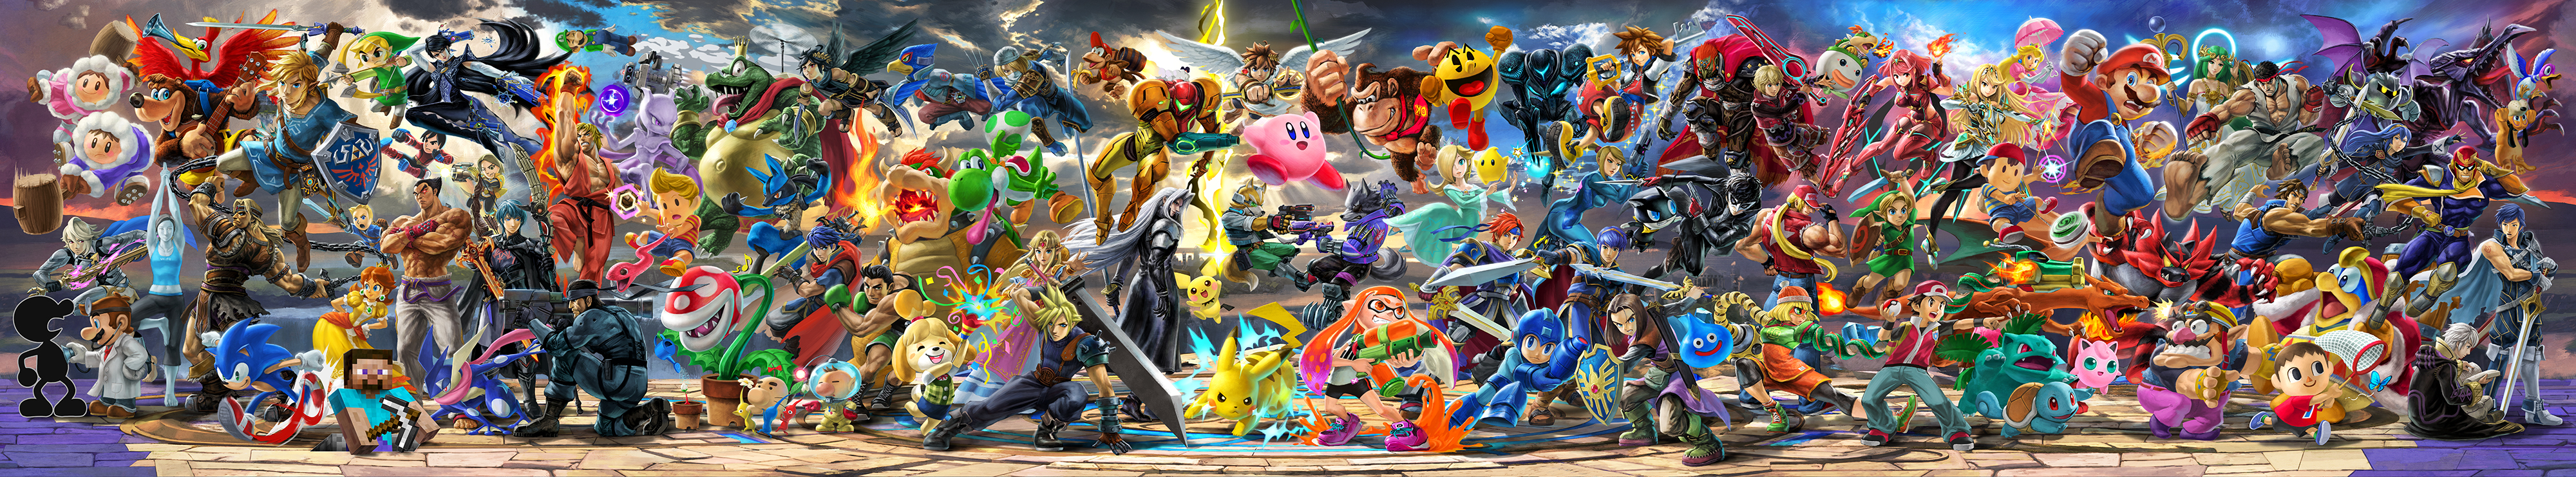 Super Smash Bros. Ultimate Art